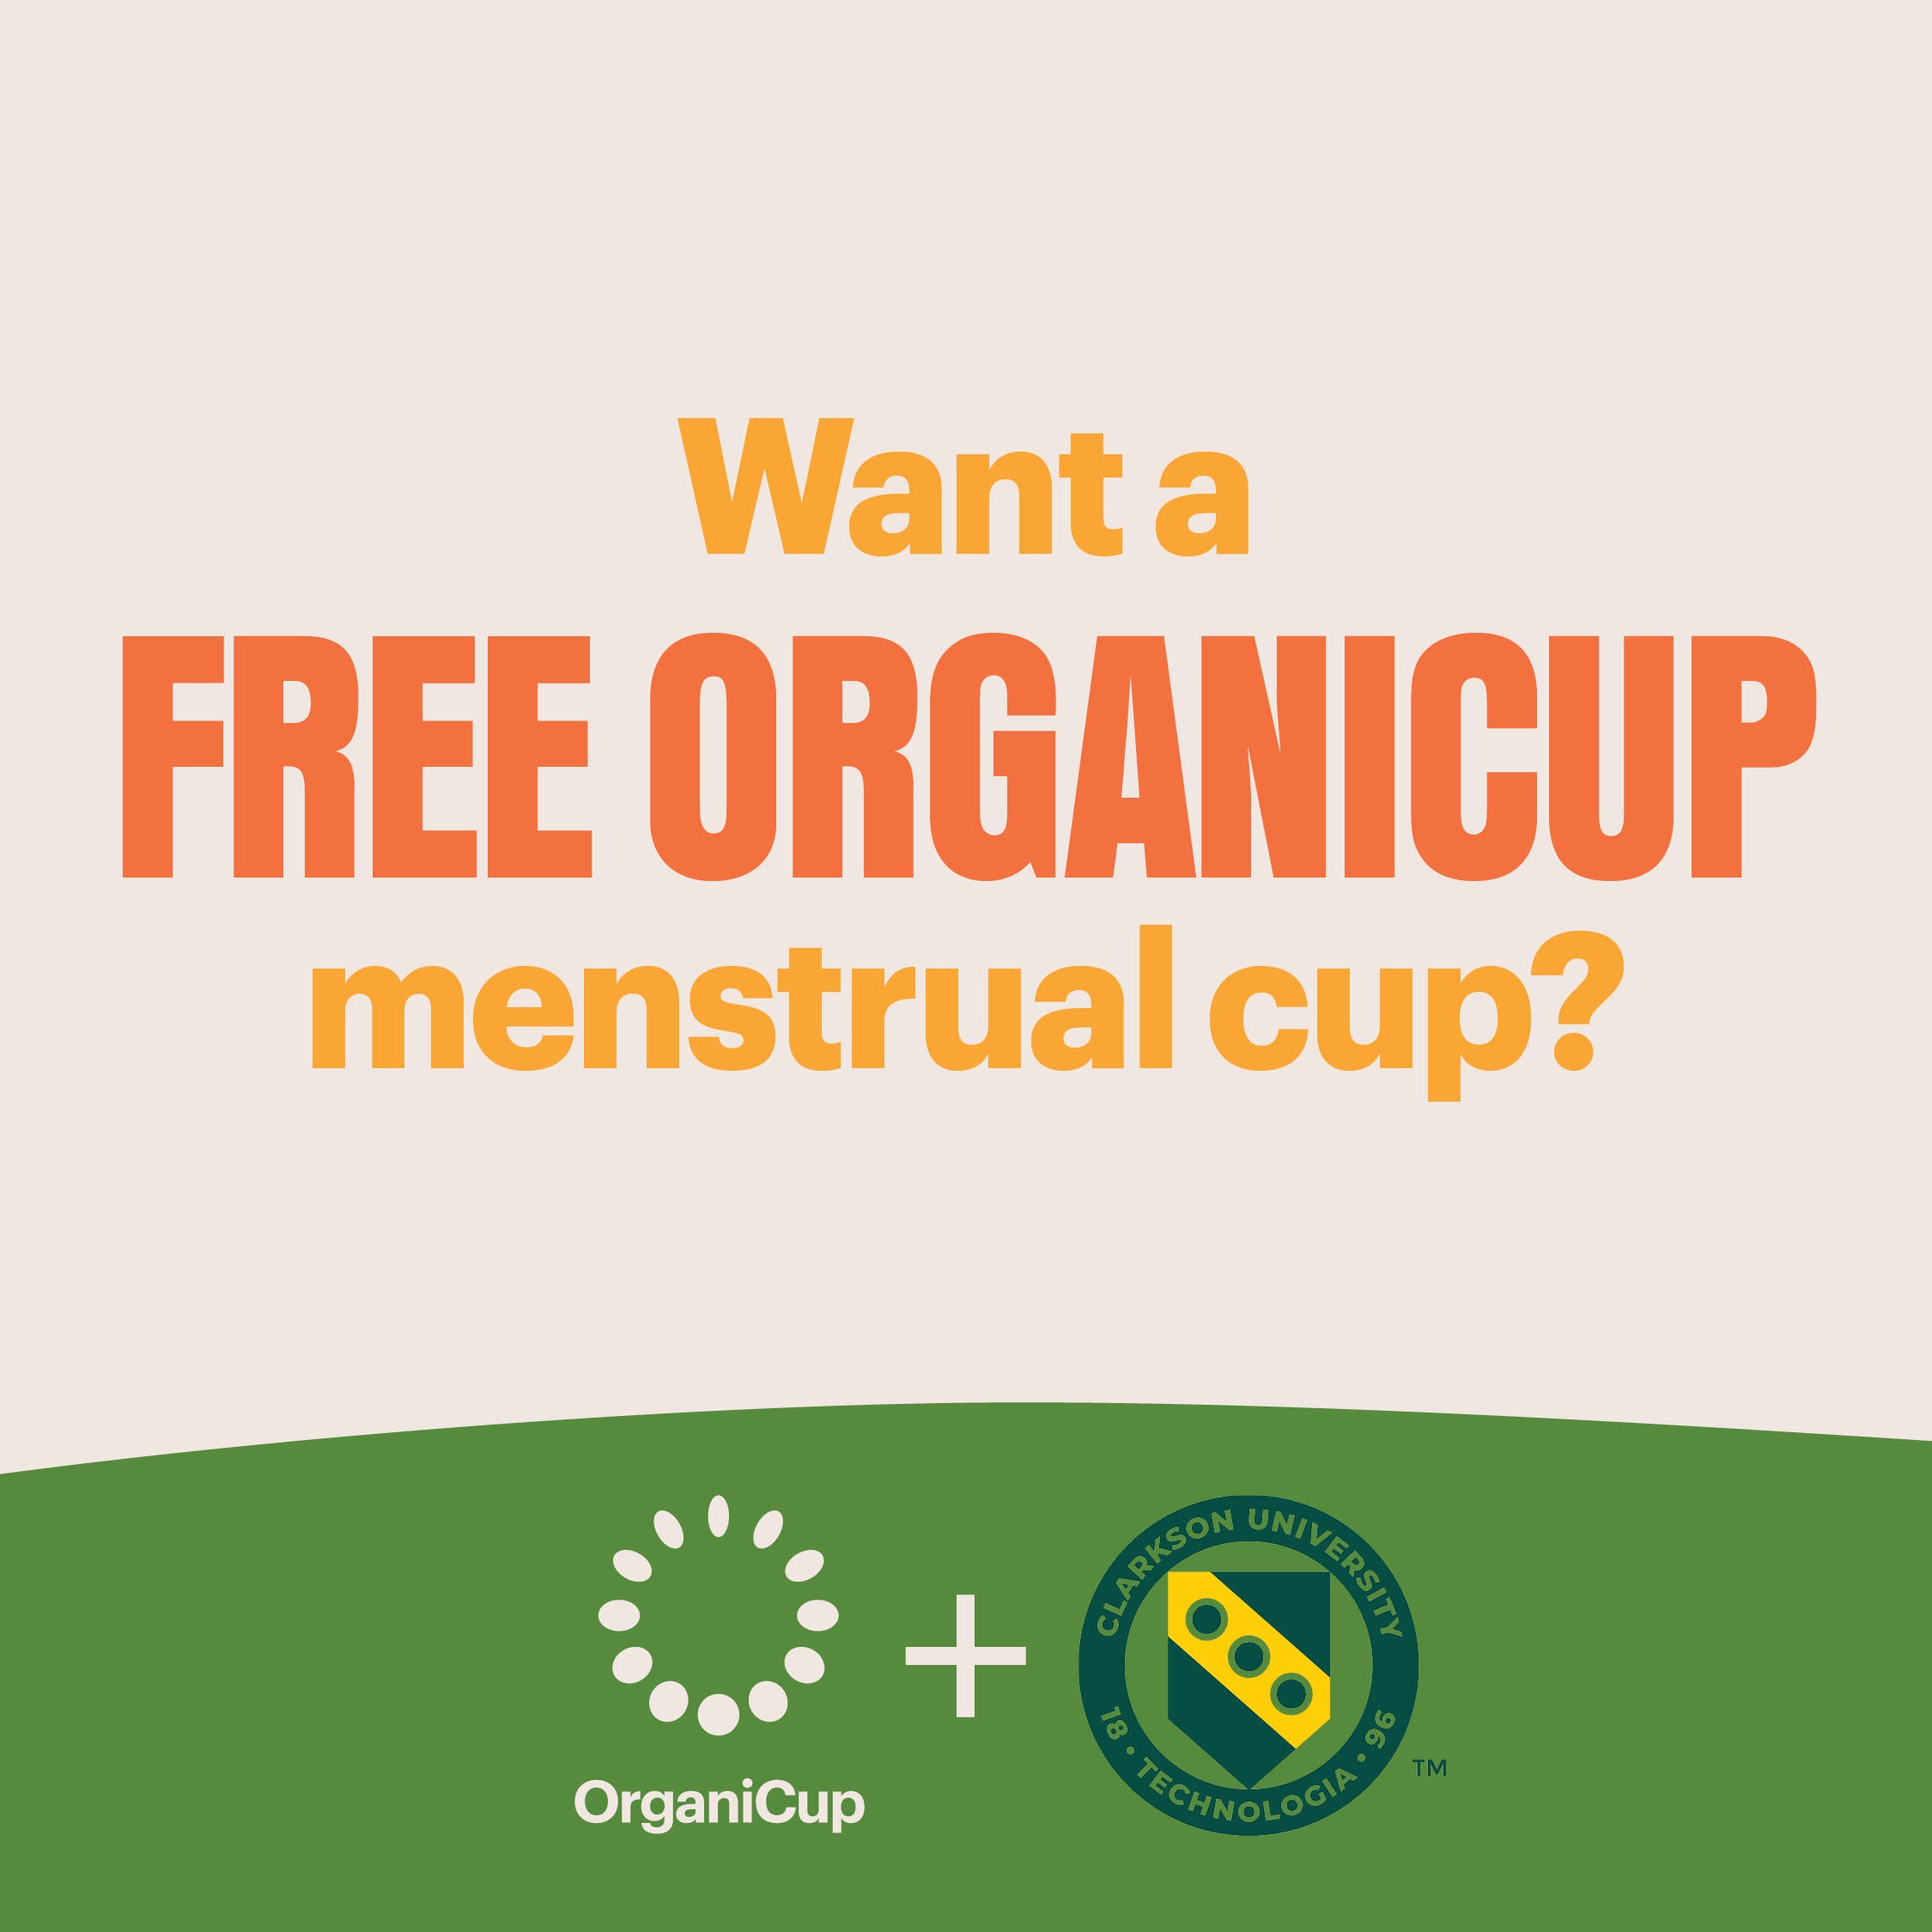 Get a FREE Reusable Menstrual Cup NOW until April 4th!